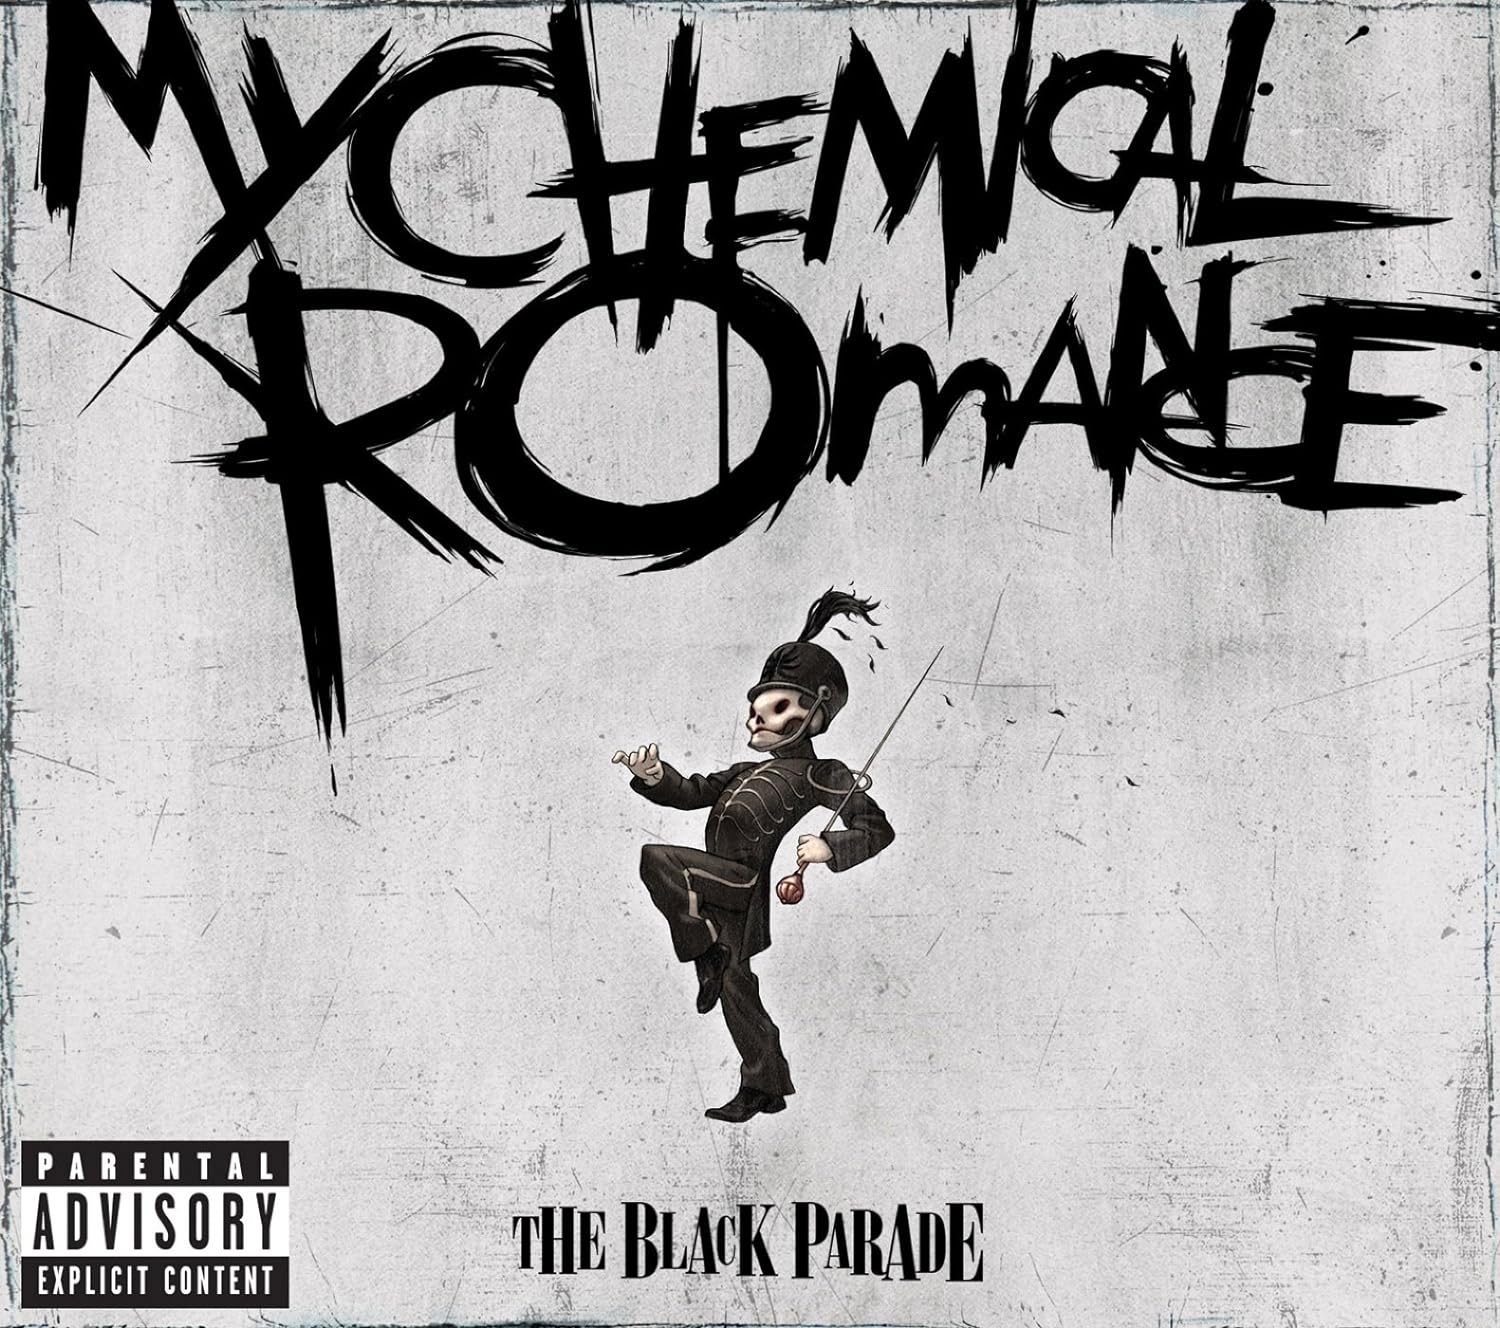 My Chemical Romance - Black Parade album cover